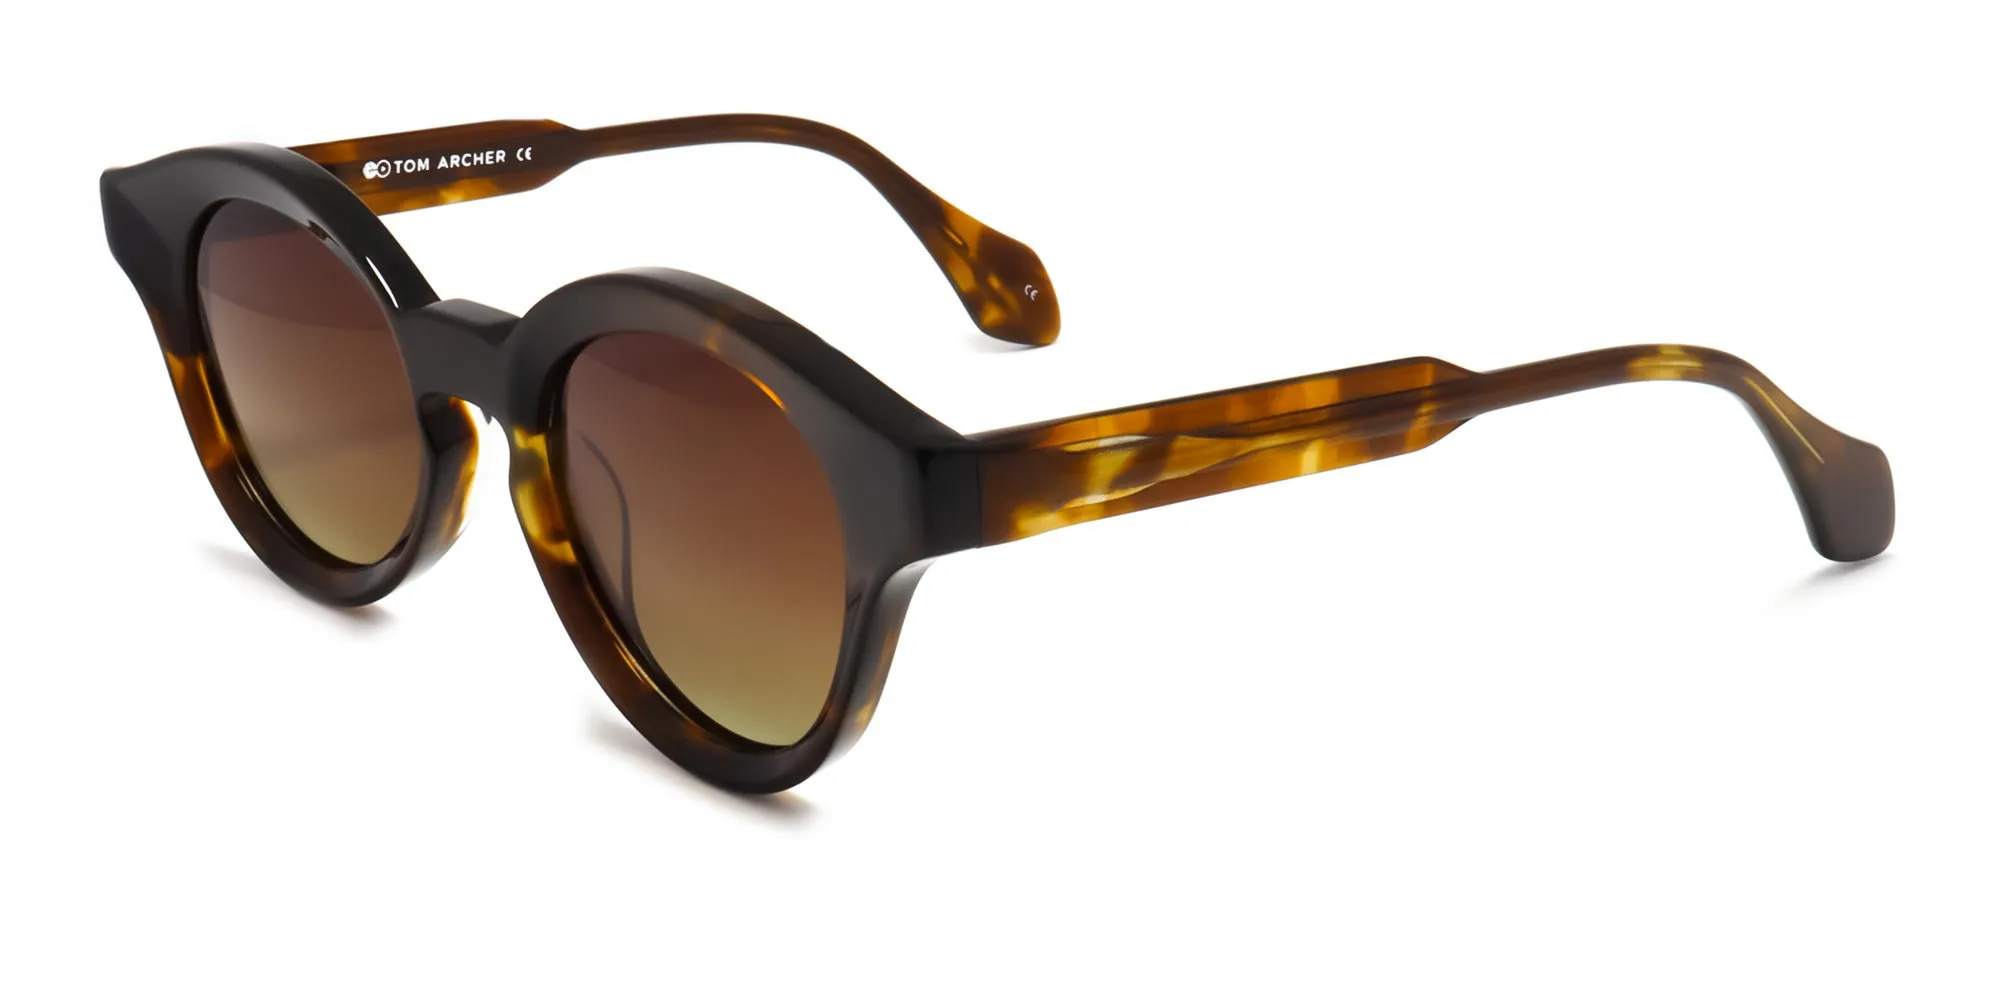 Tortoiseshell Sunglasses from £12.50 | Tiger Specs